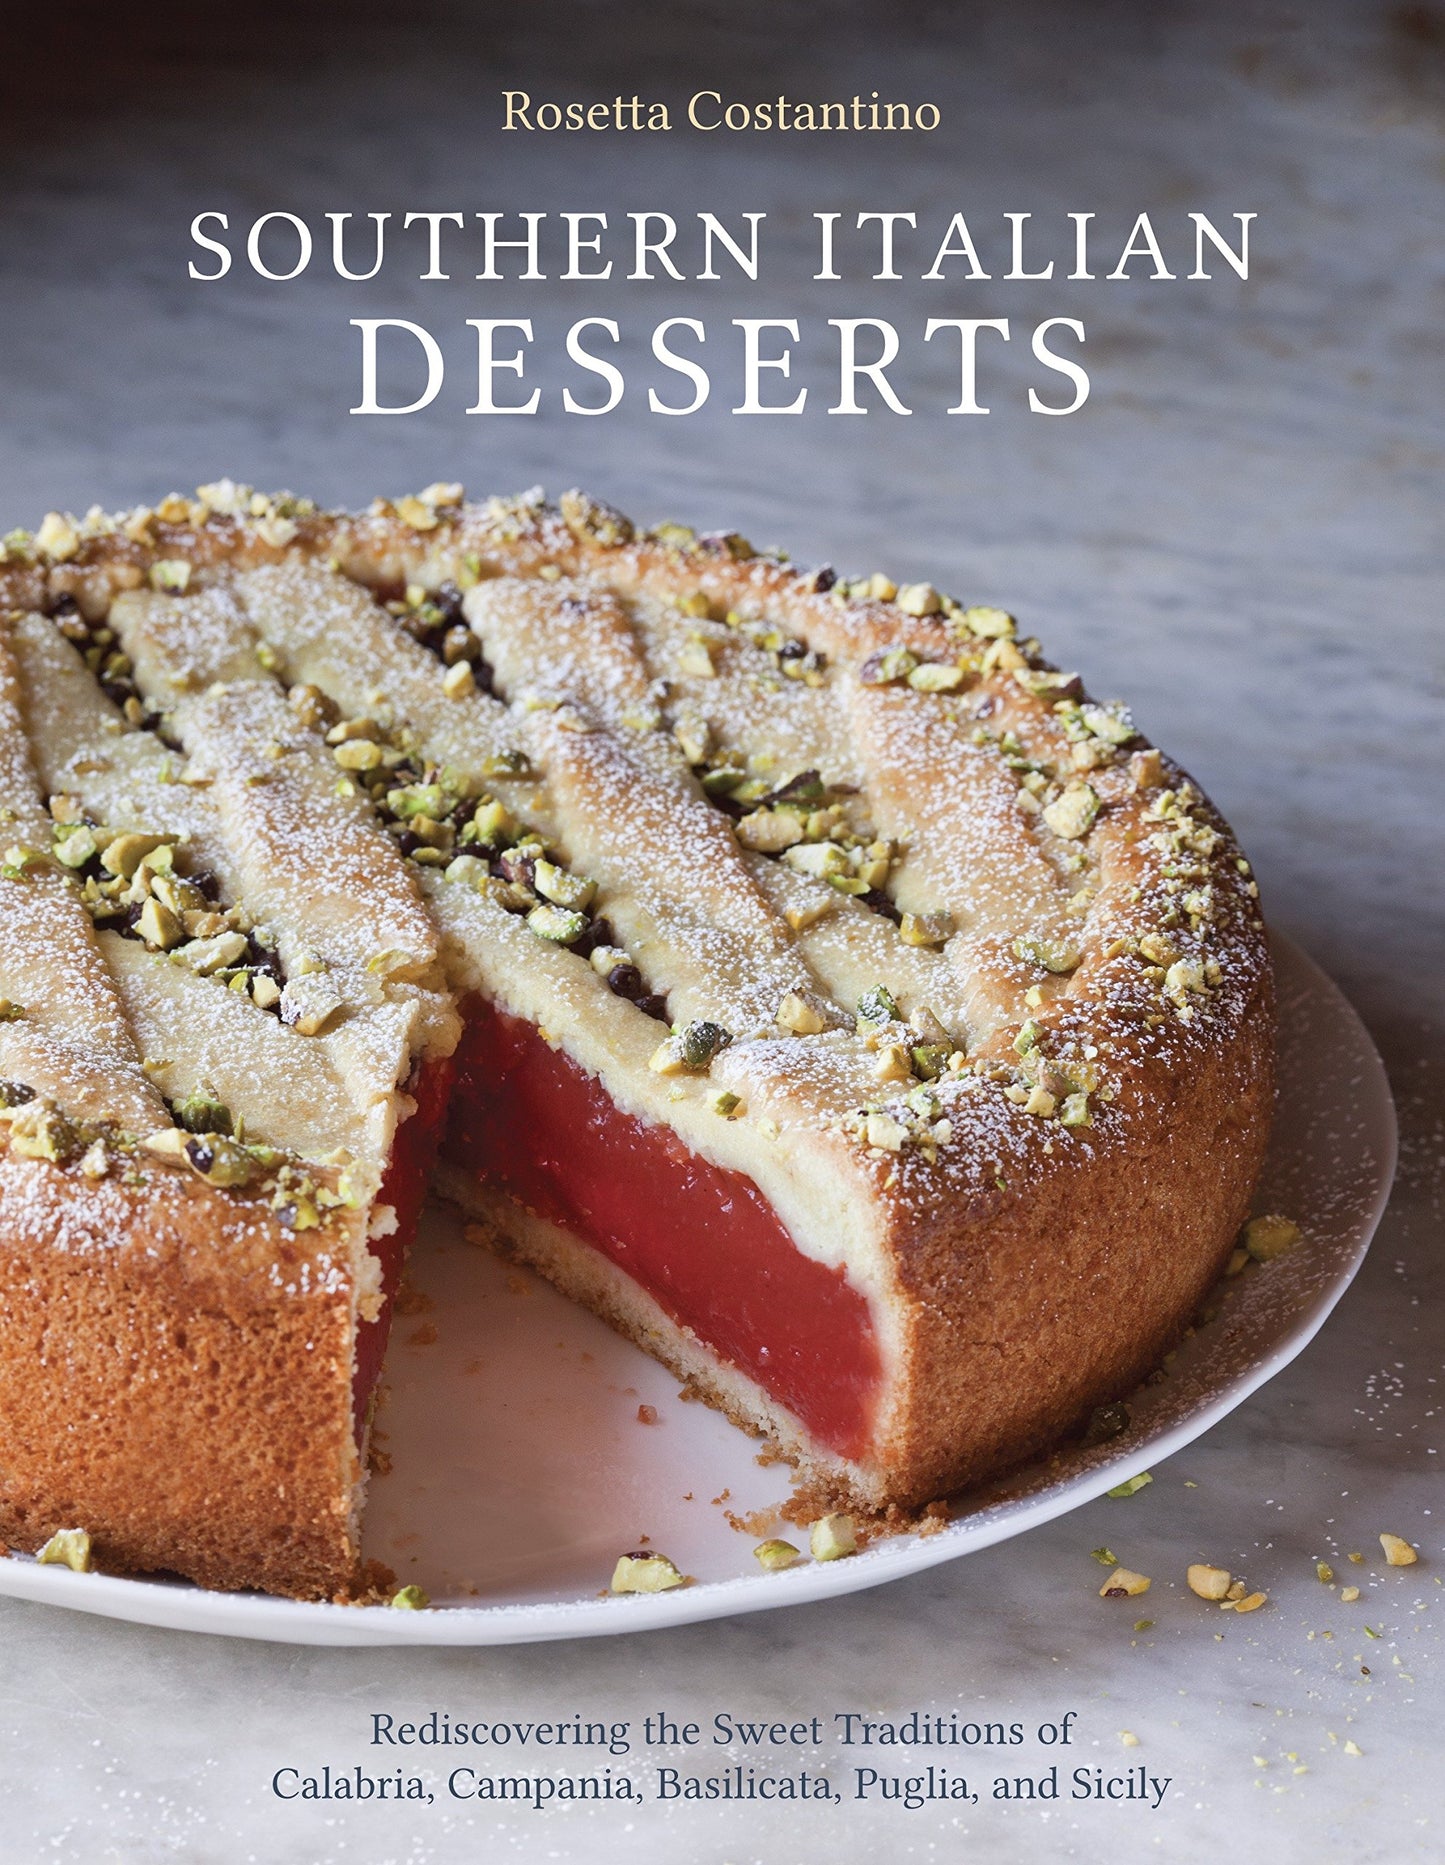 Southern Italian Desserts, book by Rosetta Constantino